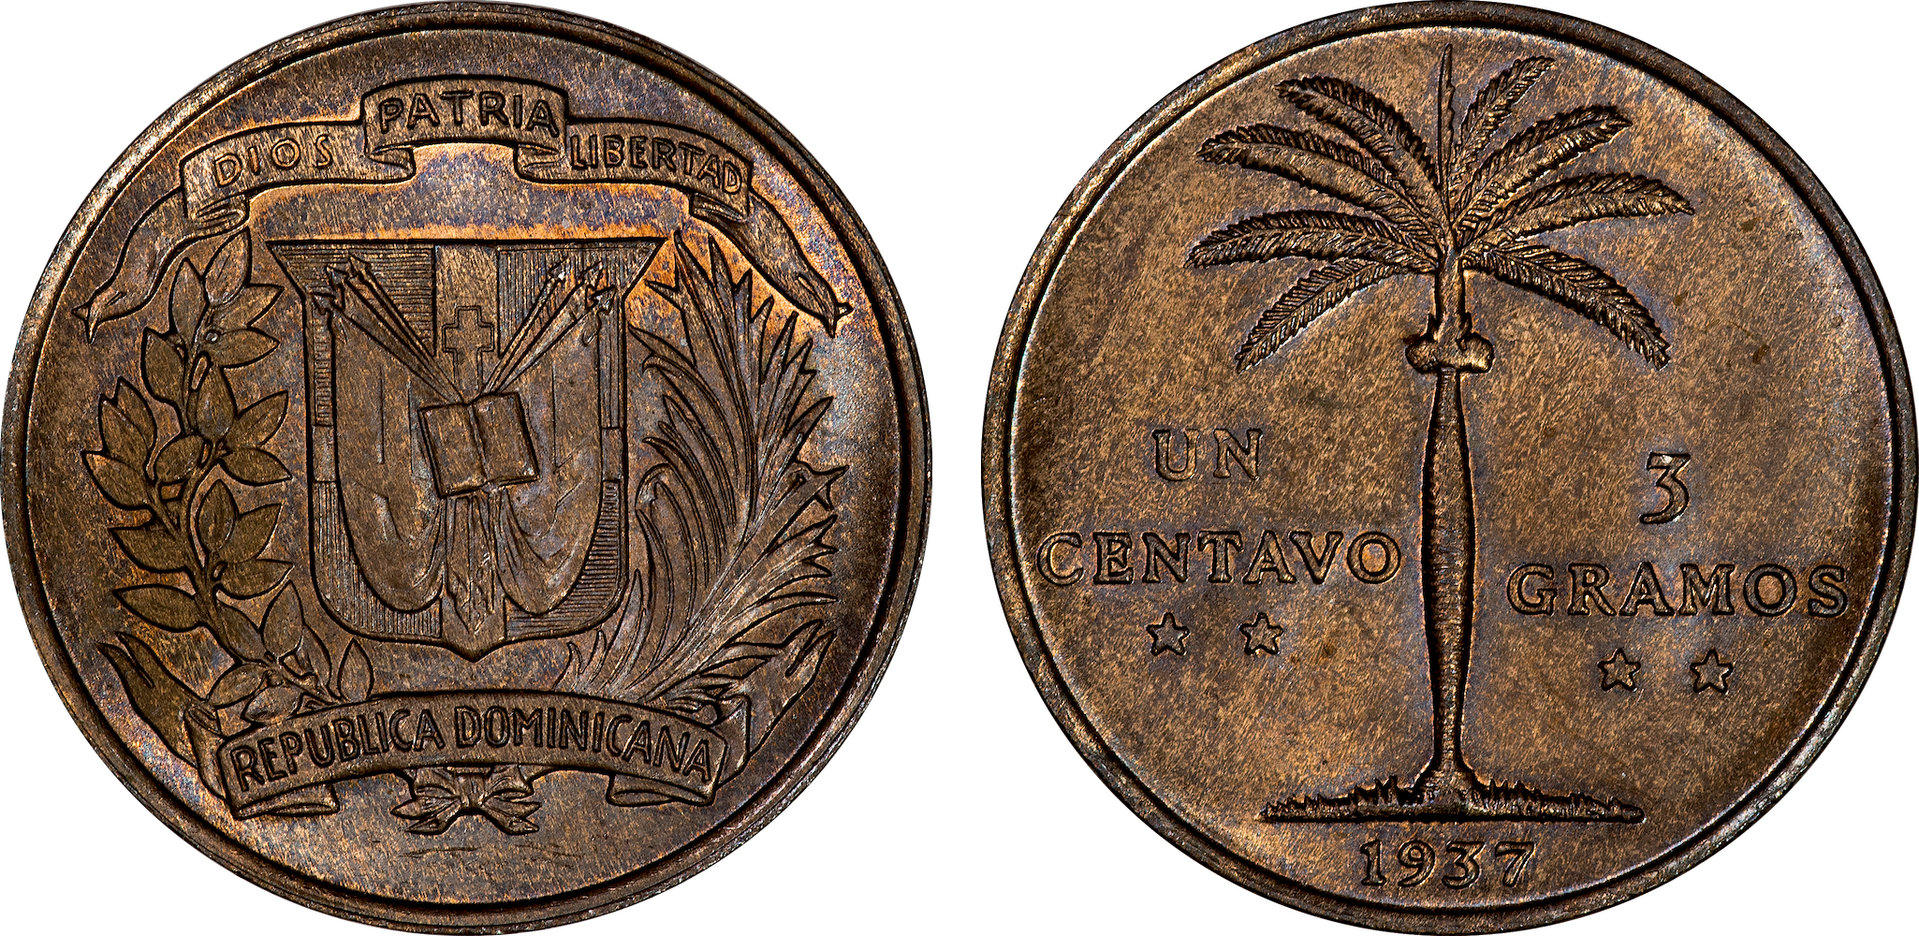 Dominican Republic - 1937 1 Centavo.jpg